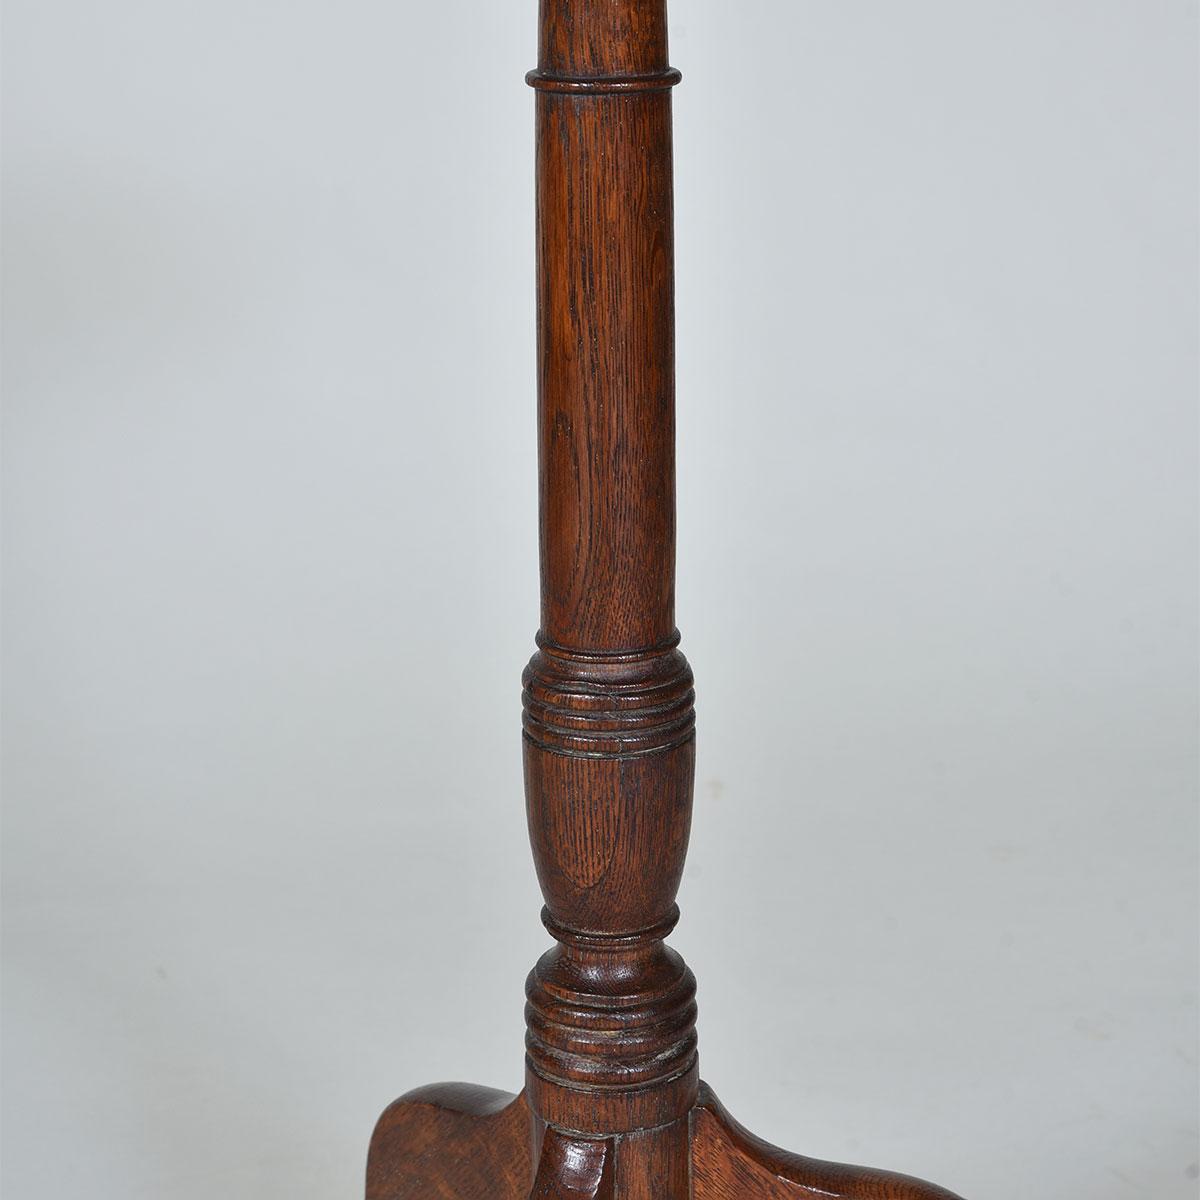 Late 18th century Oak tripod table